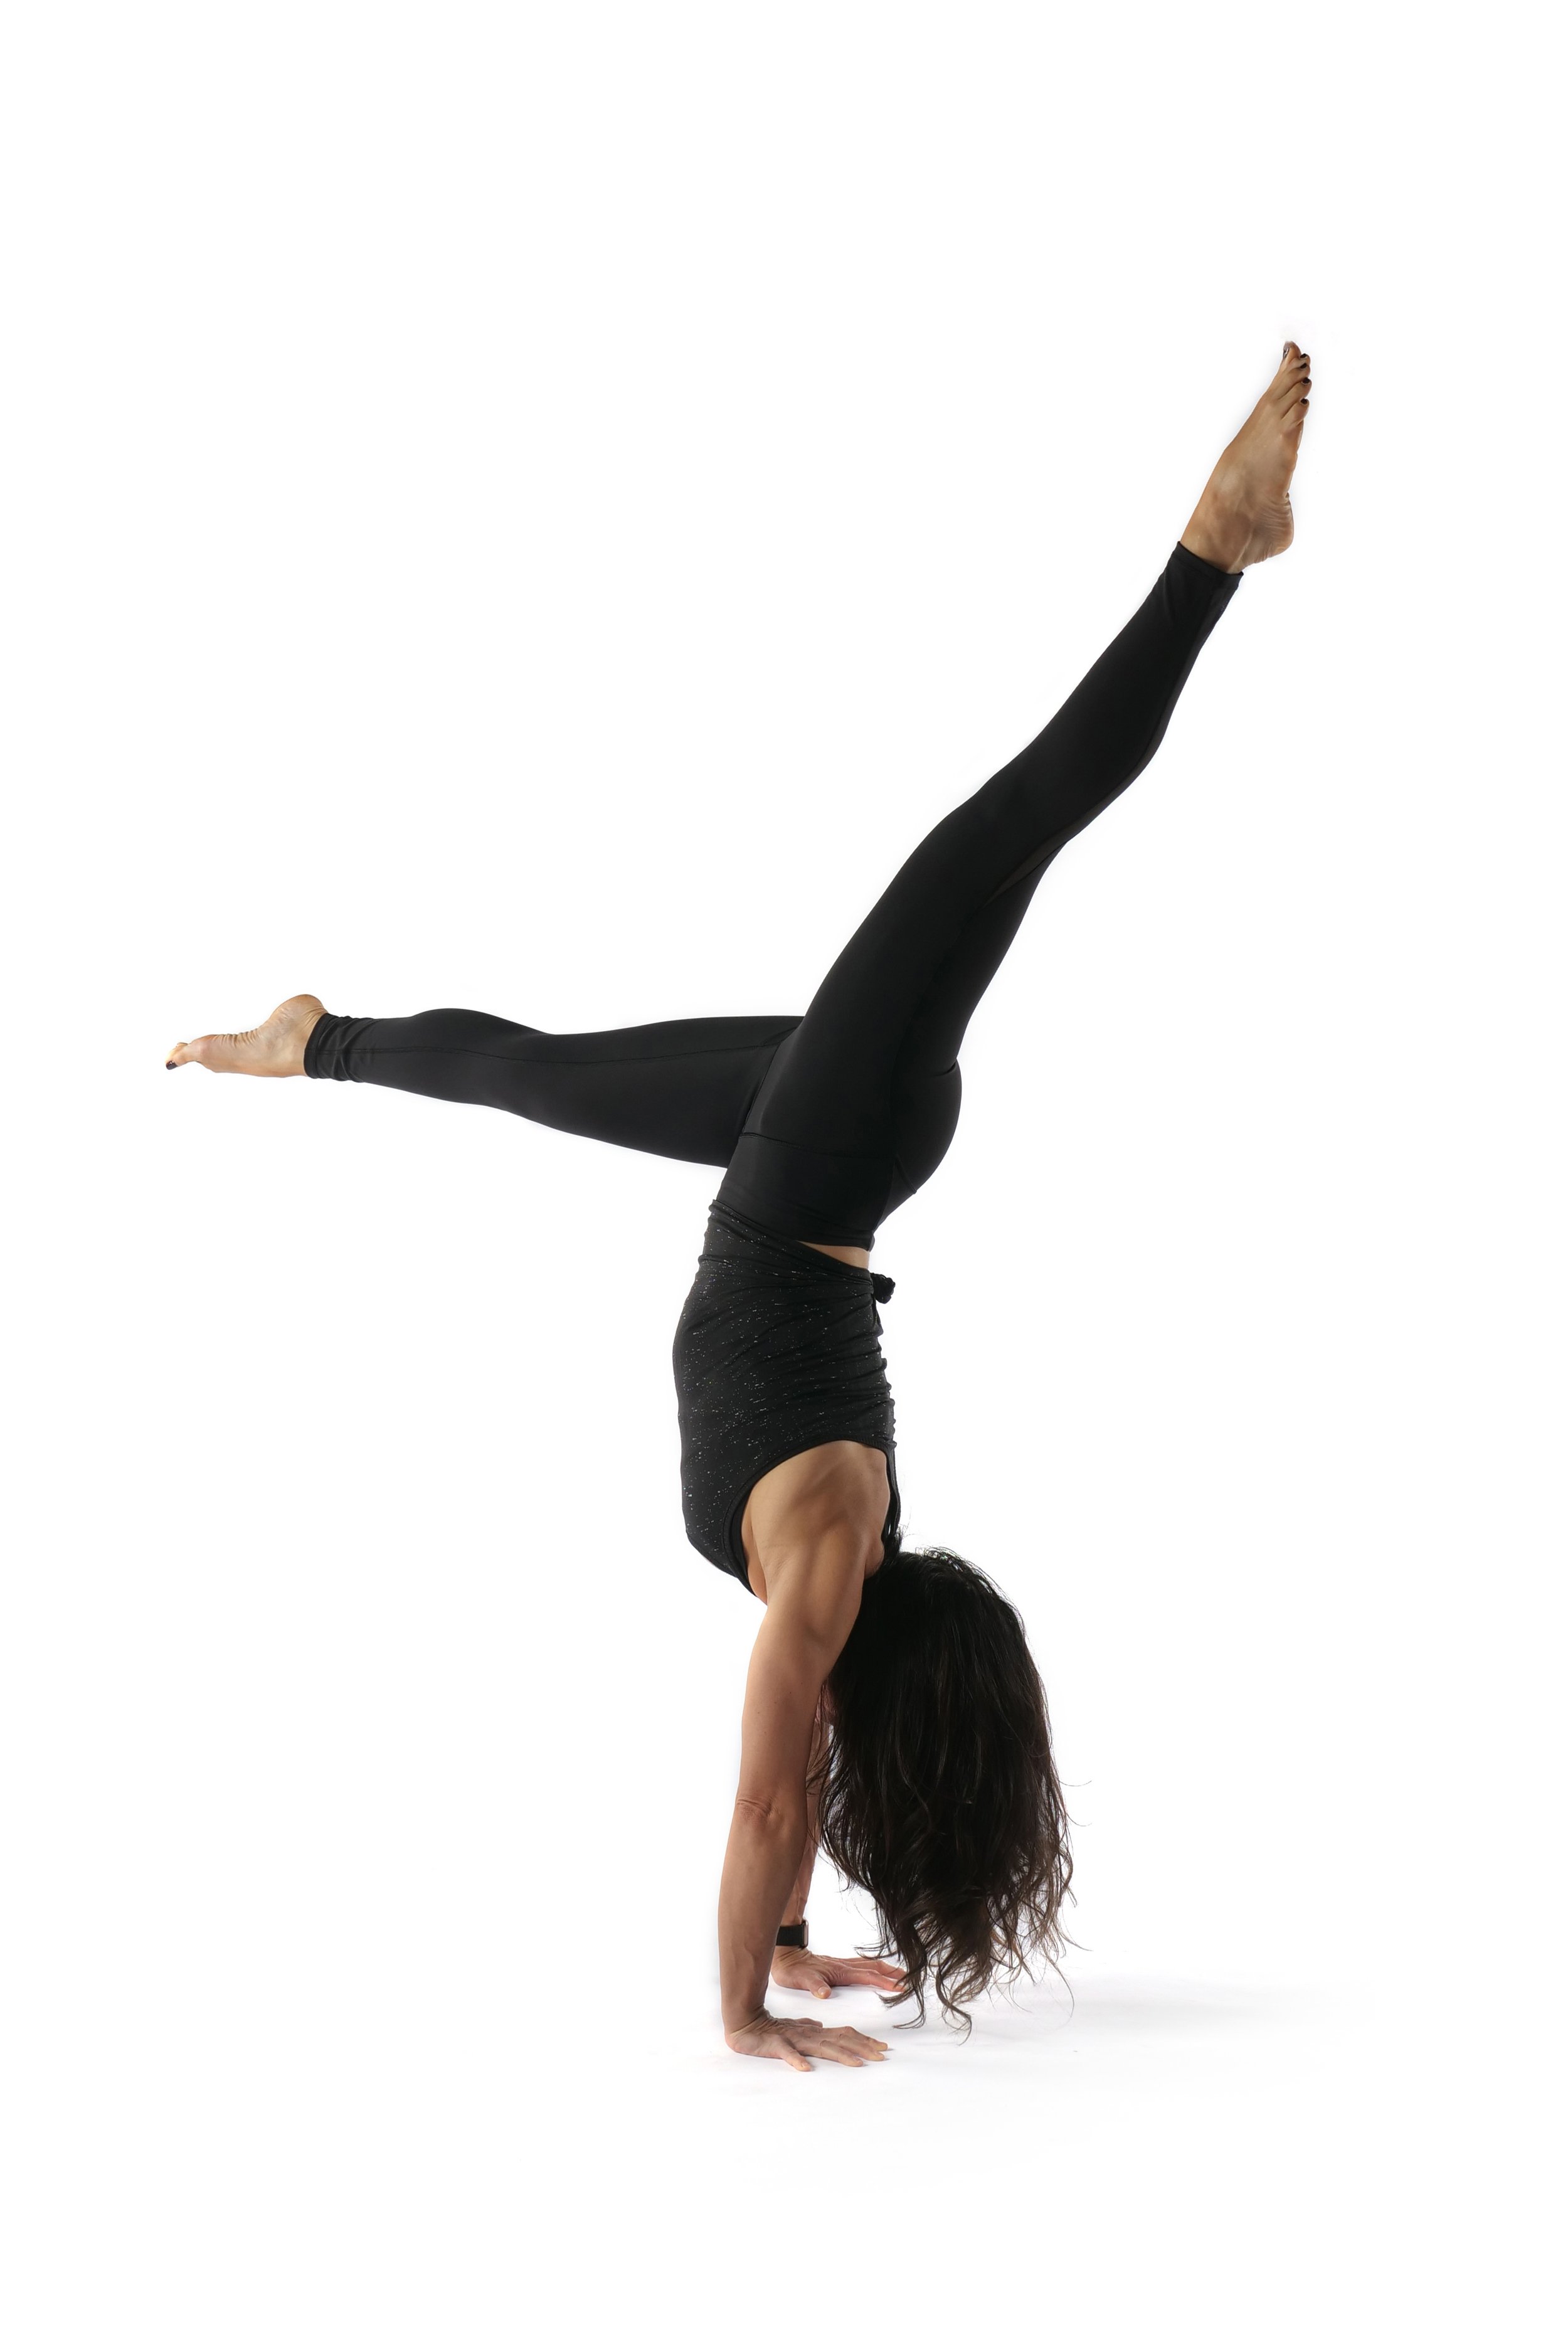 Incredible Acrobatic Pose | Yoga poses, Acrobatic gymnastics, Partner yoga